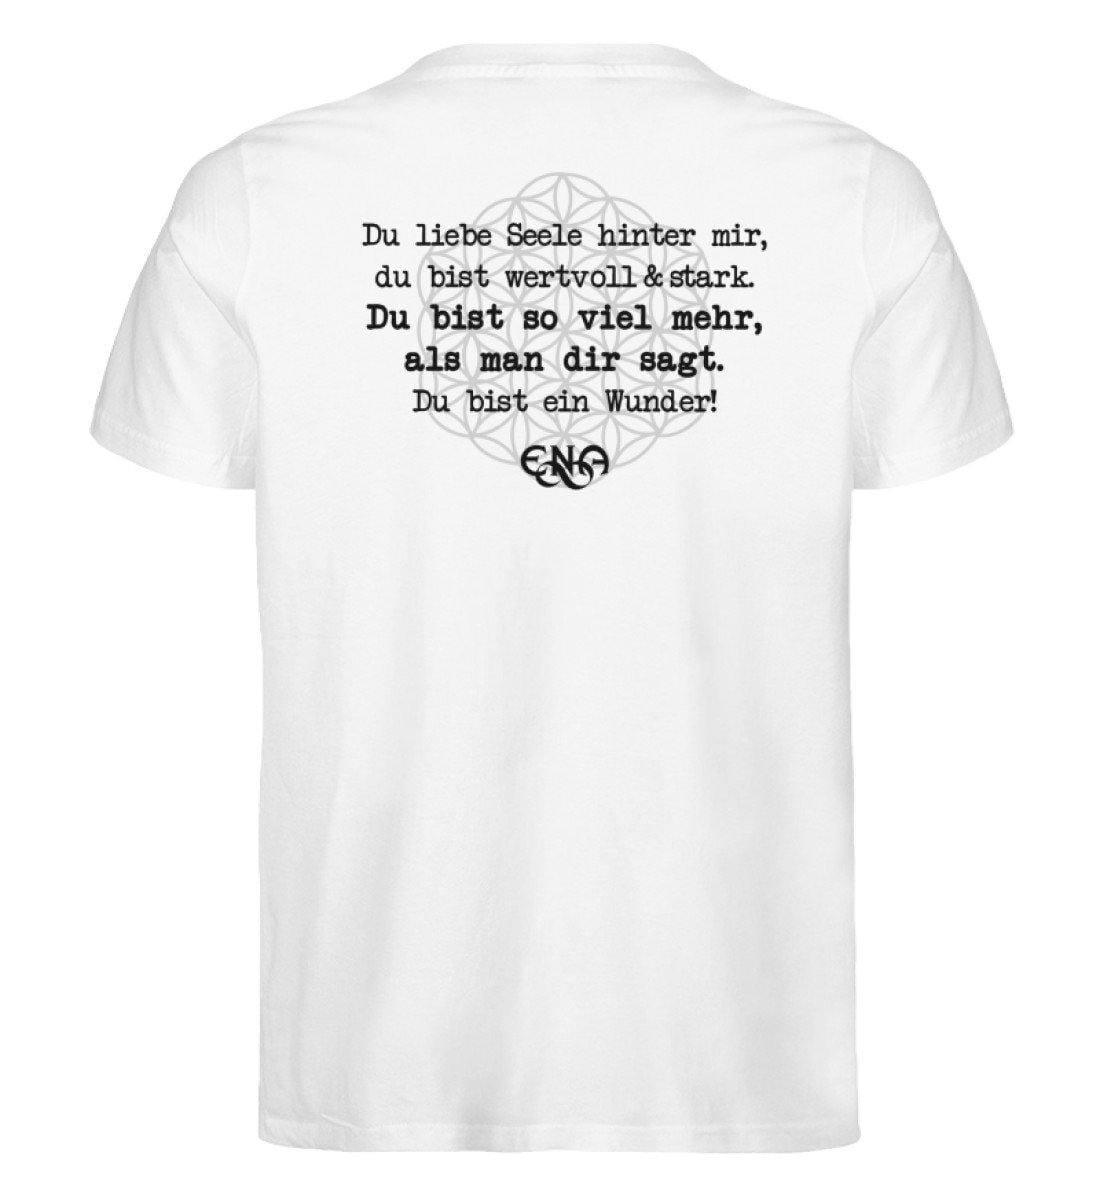 Du liebe Seele hinter mir ... [ENA] - Unisex Organic Shirt - Team Vegan © vegan t shirt